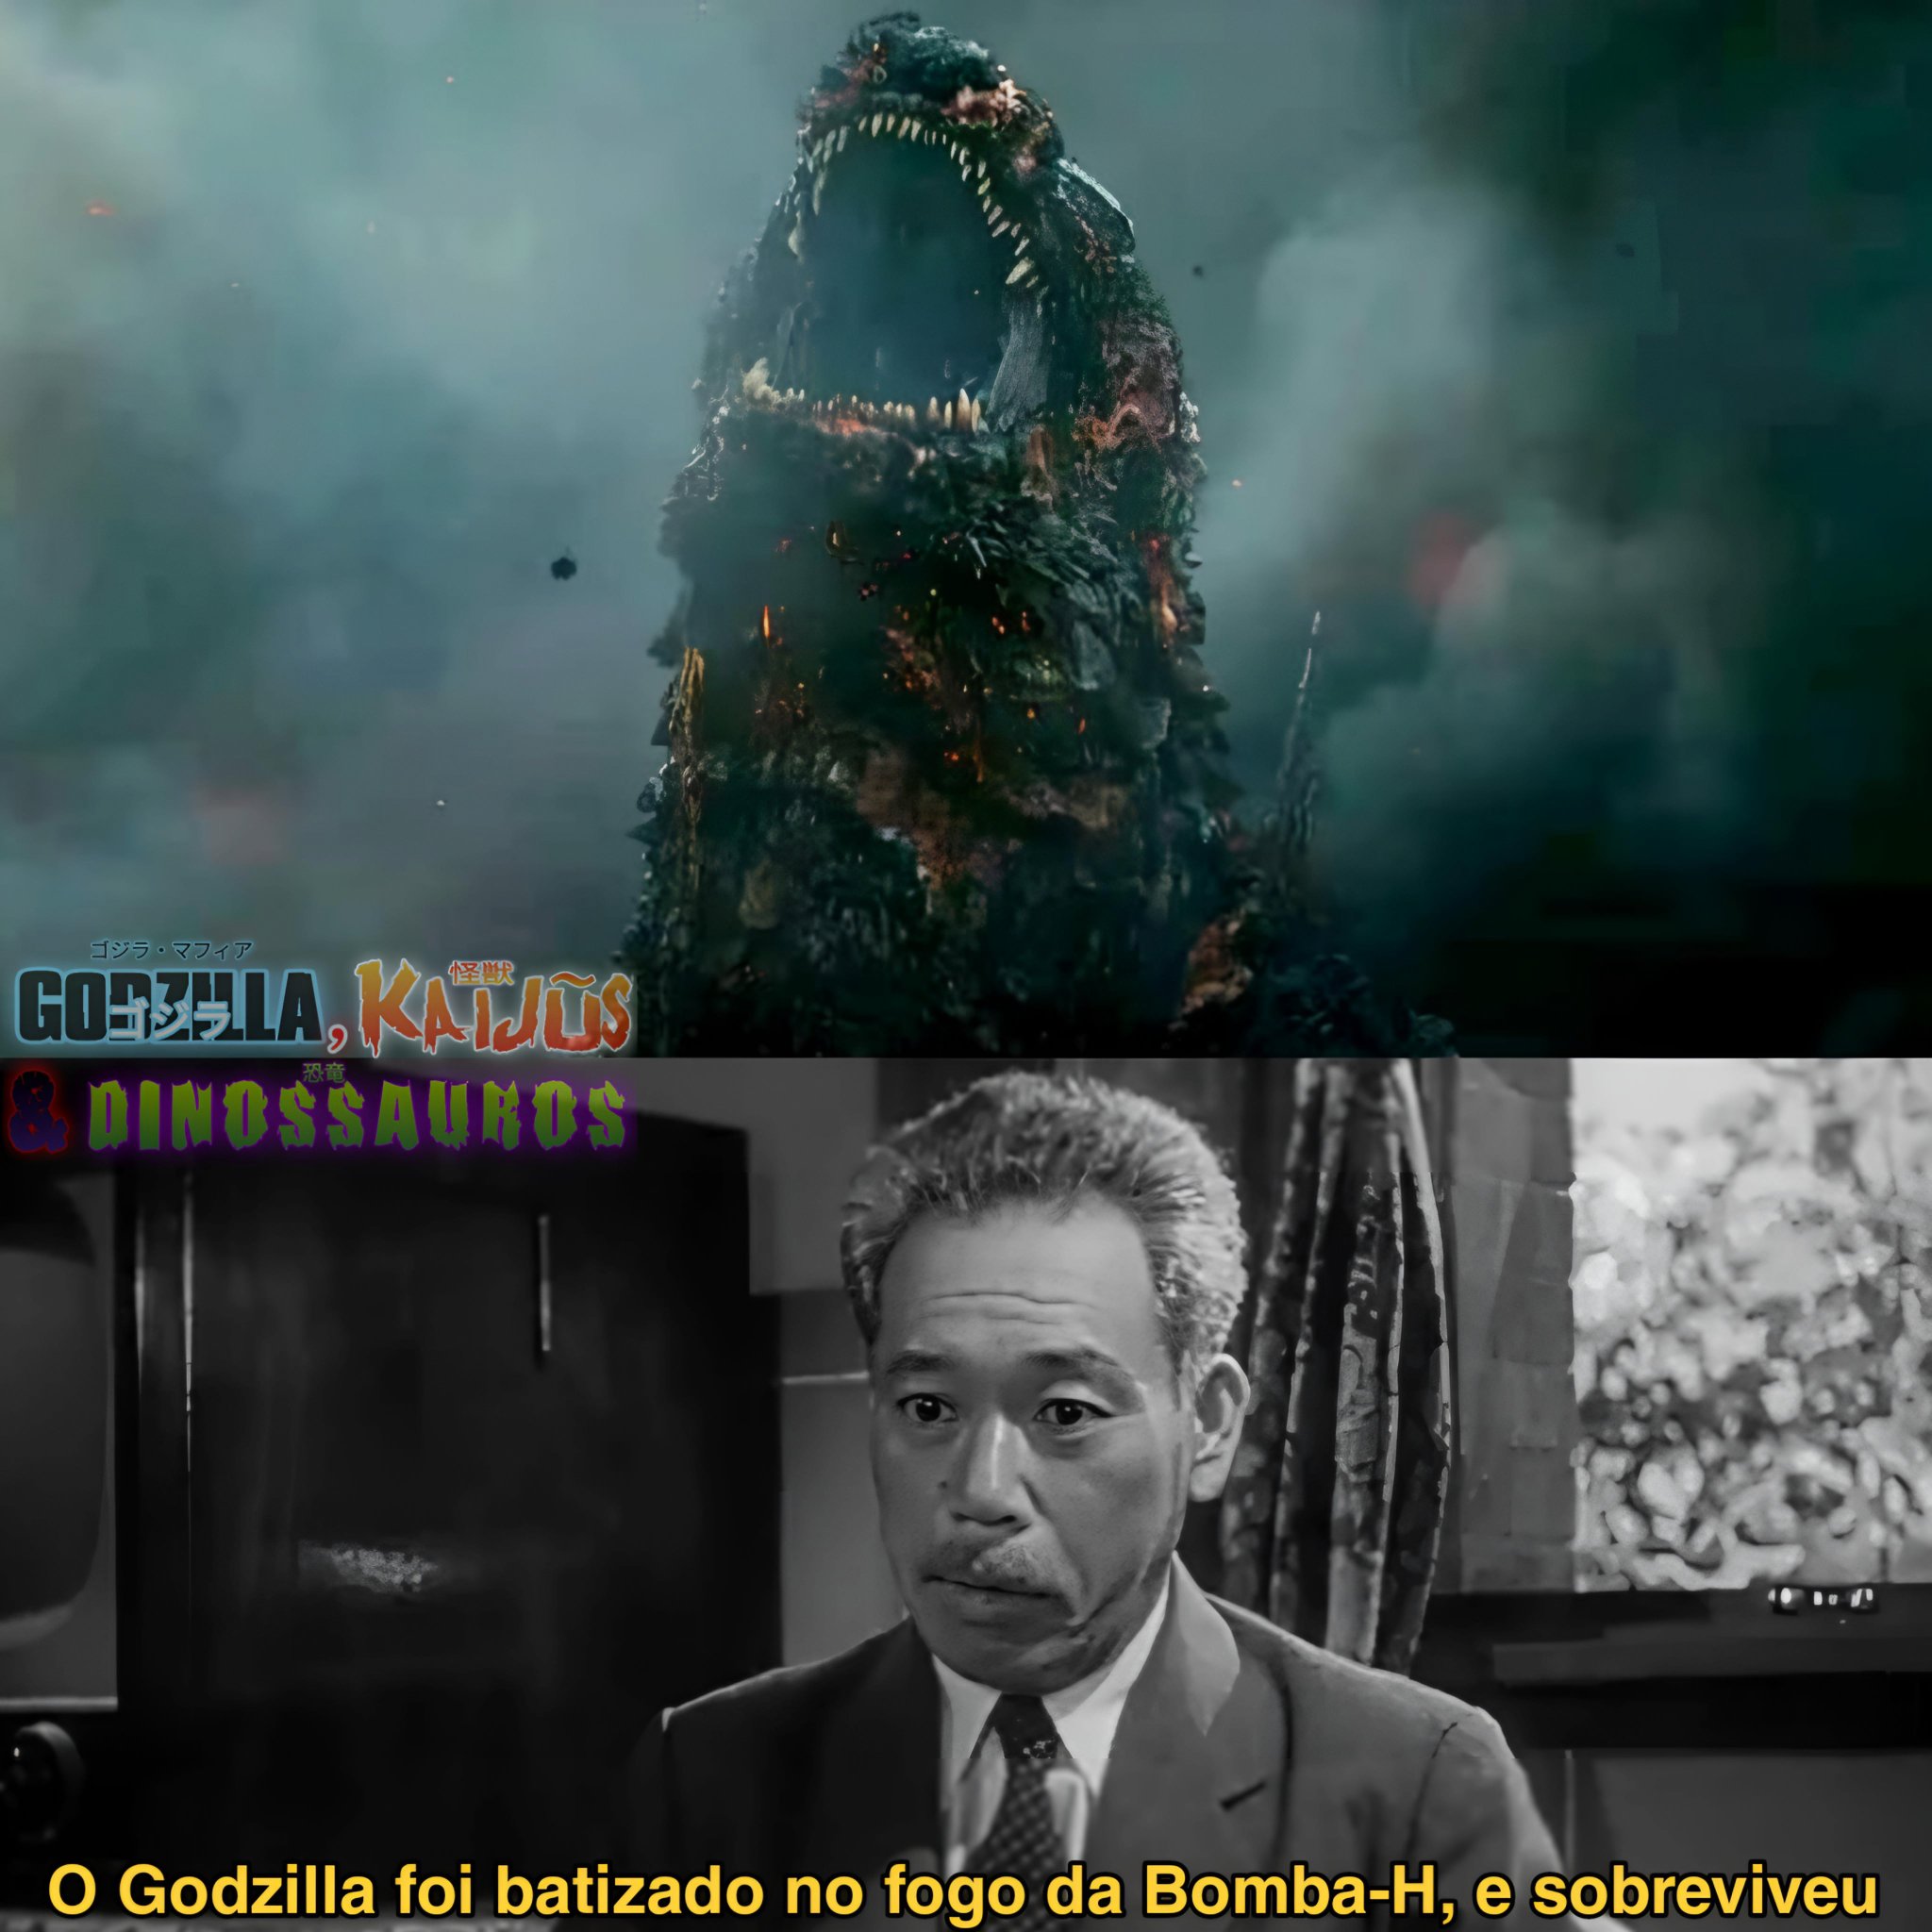 Blog Godzilla, Kaijus & Dinossauros